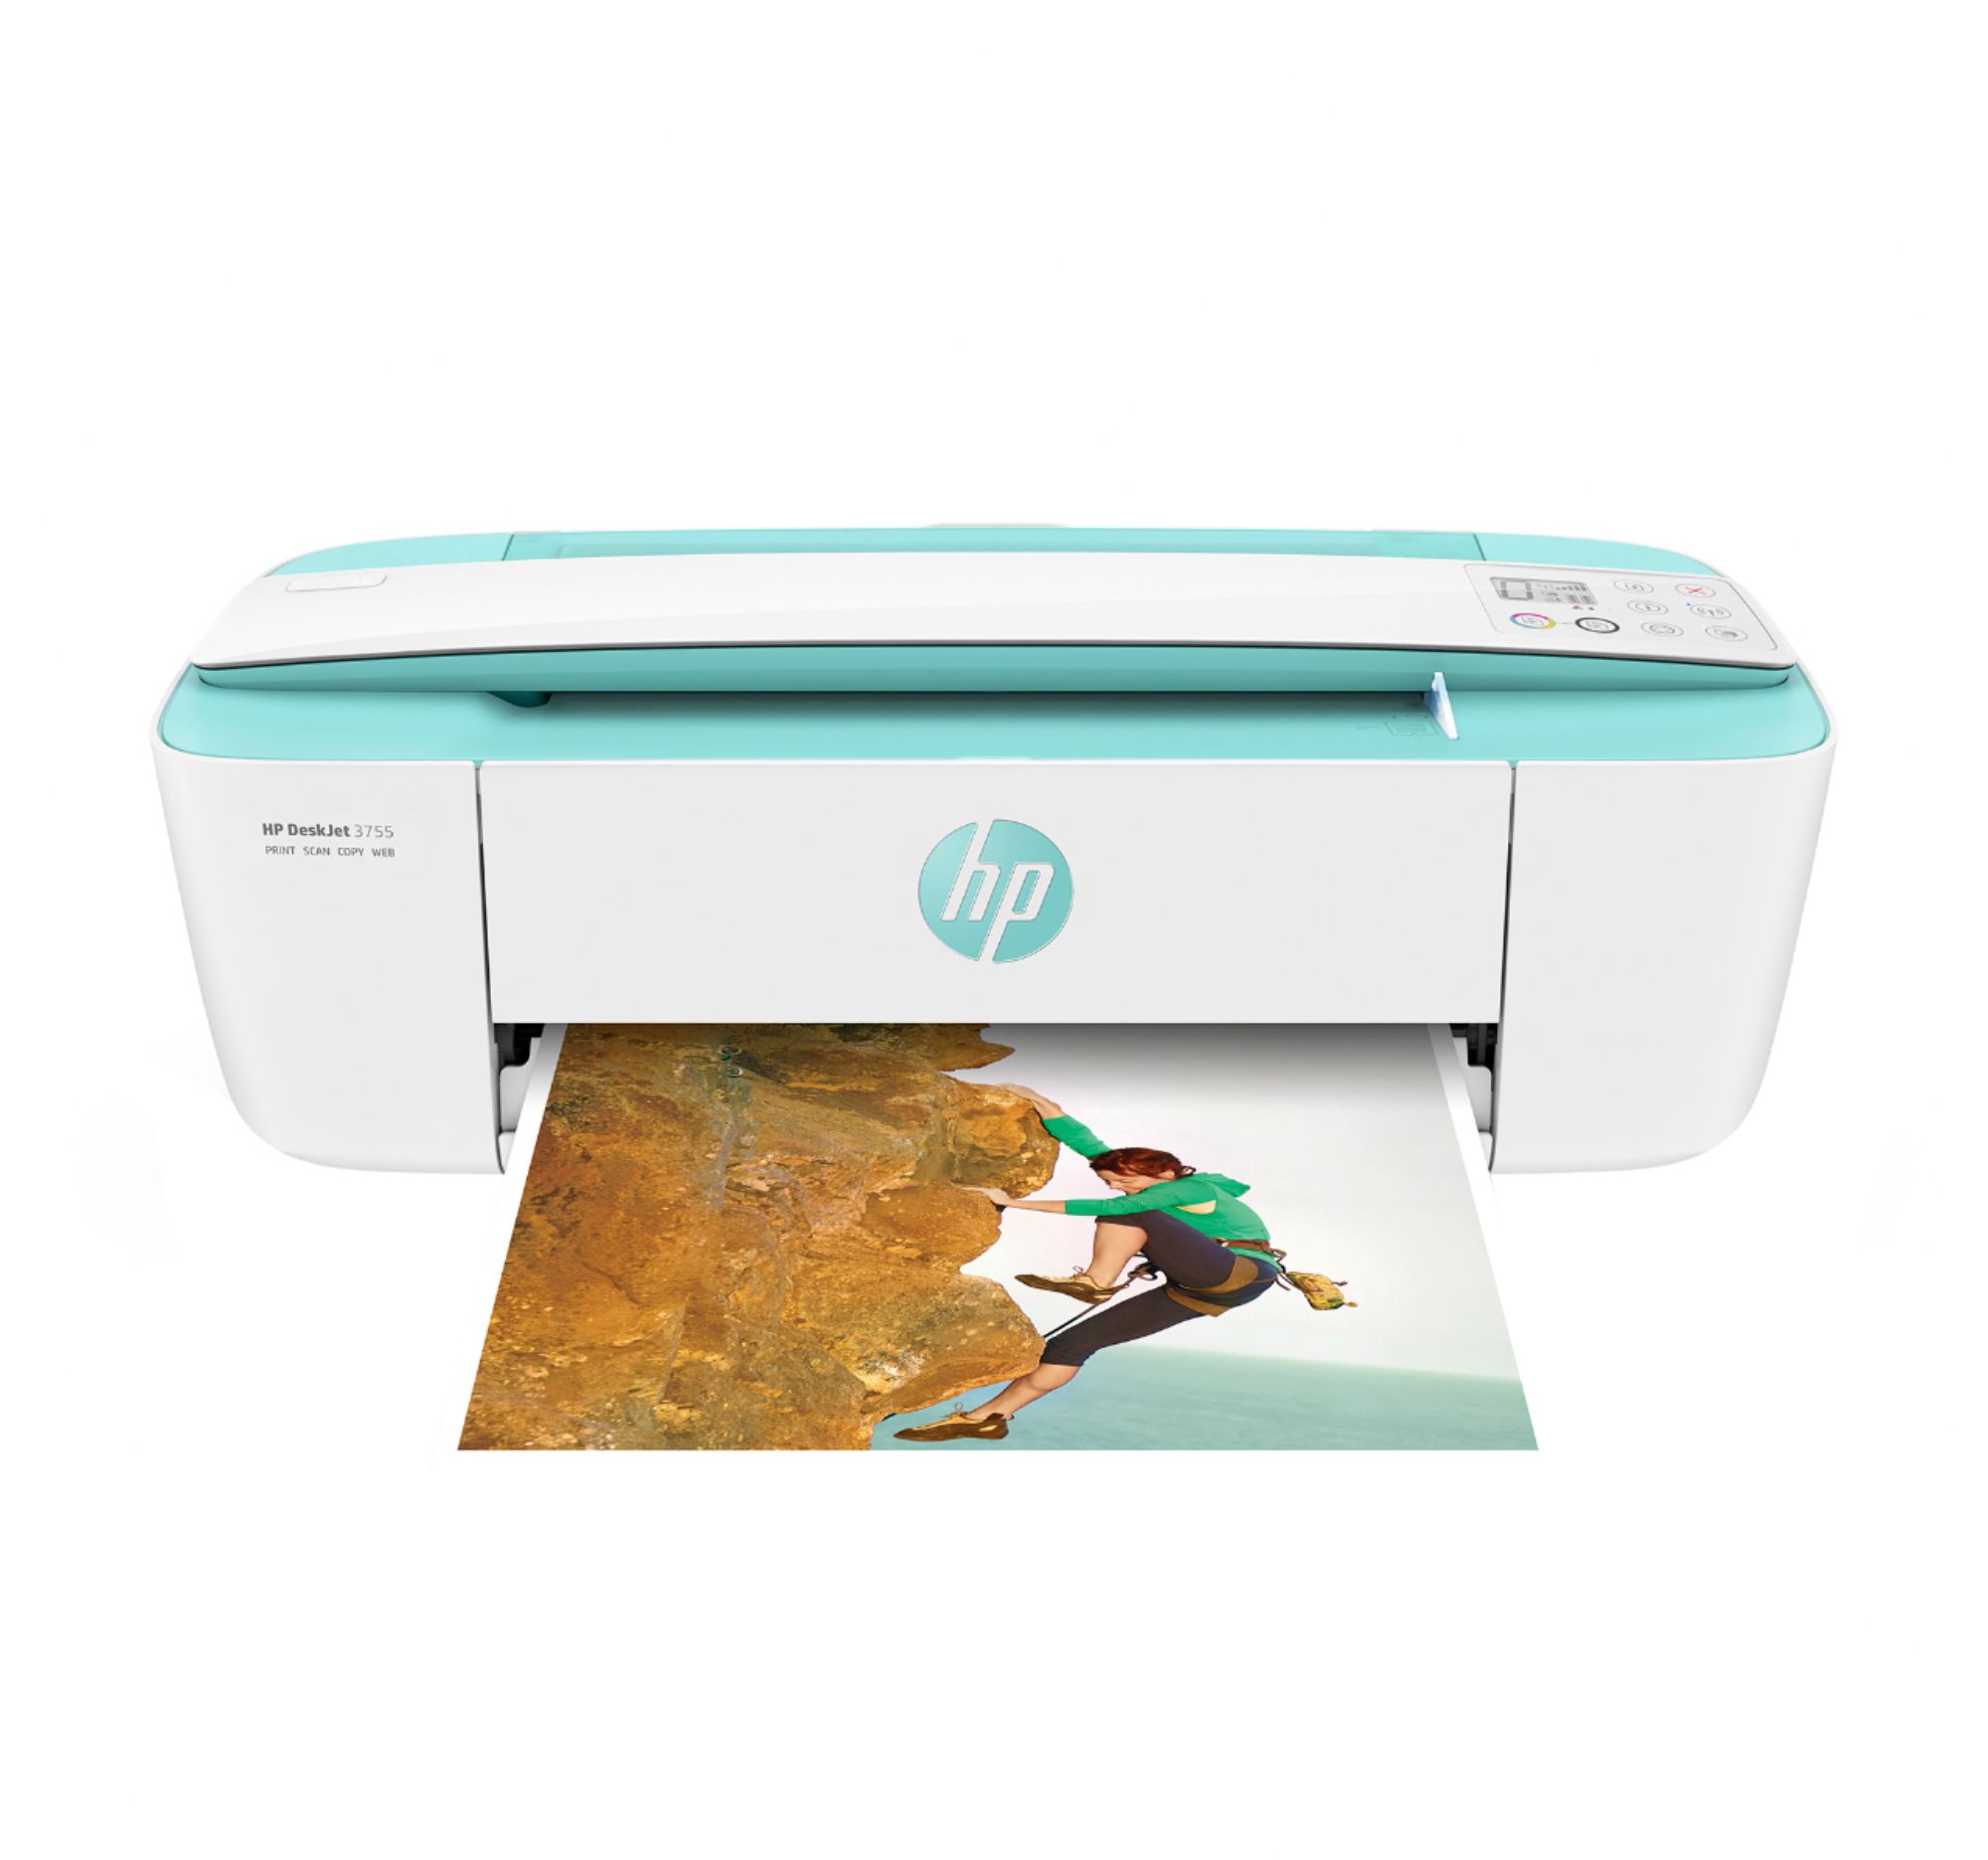 At understrege Robe sår Best Buy: HP DeskJet 3755 Wireless All-in-One Instant Ink Ready Inkjet  Printer Seagrass J9V92A#B1H